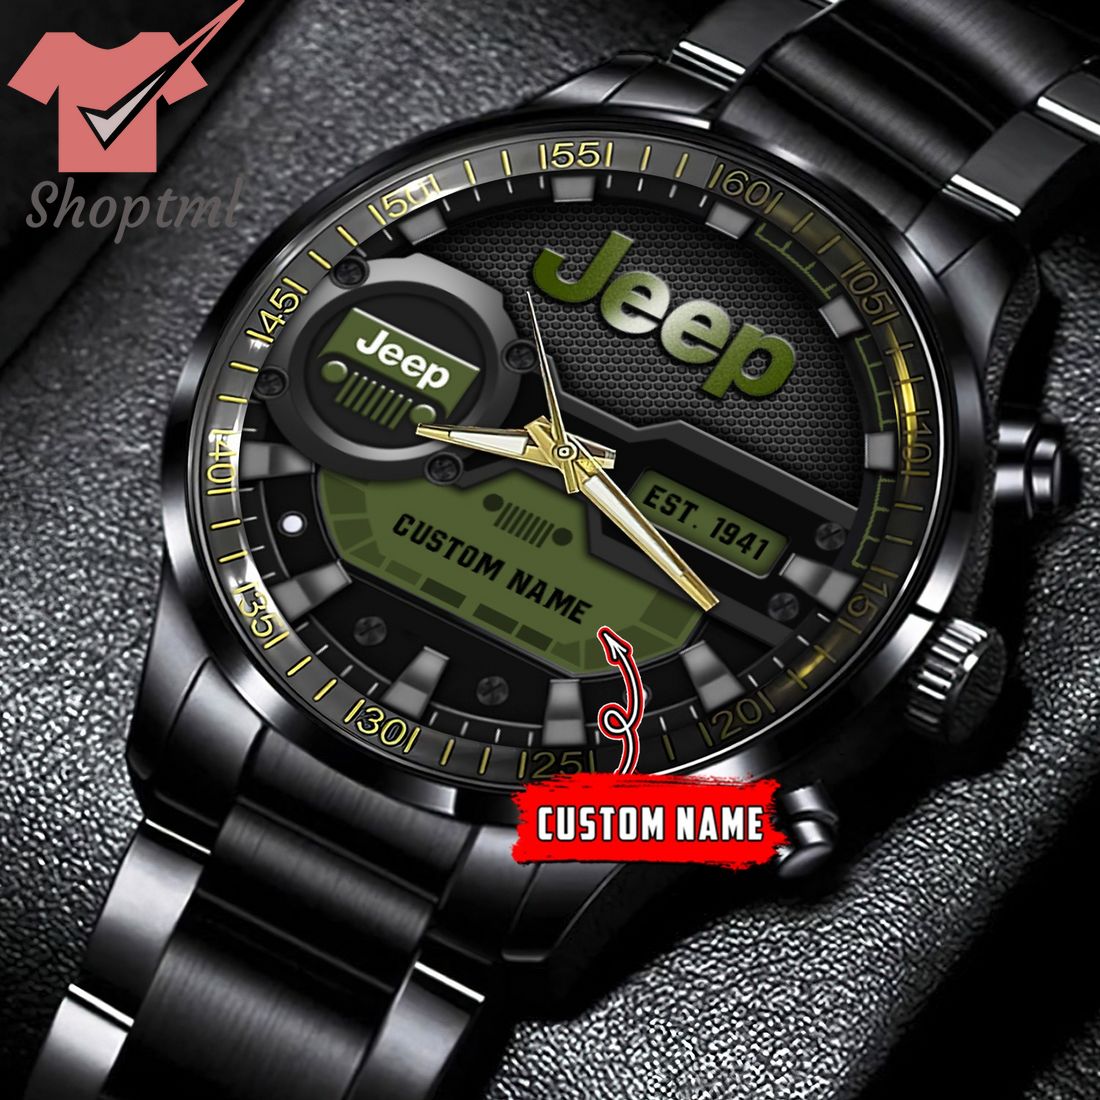 Jeep est 1941 custom name black stainless steel watch